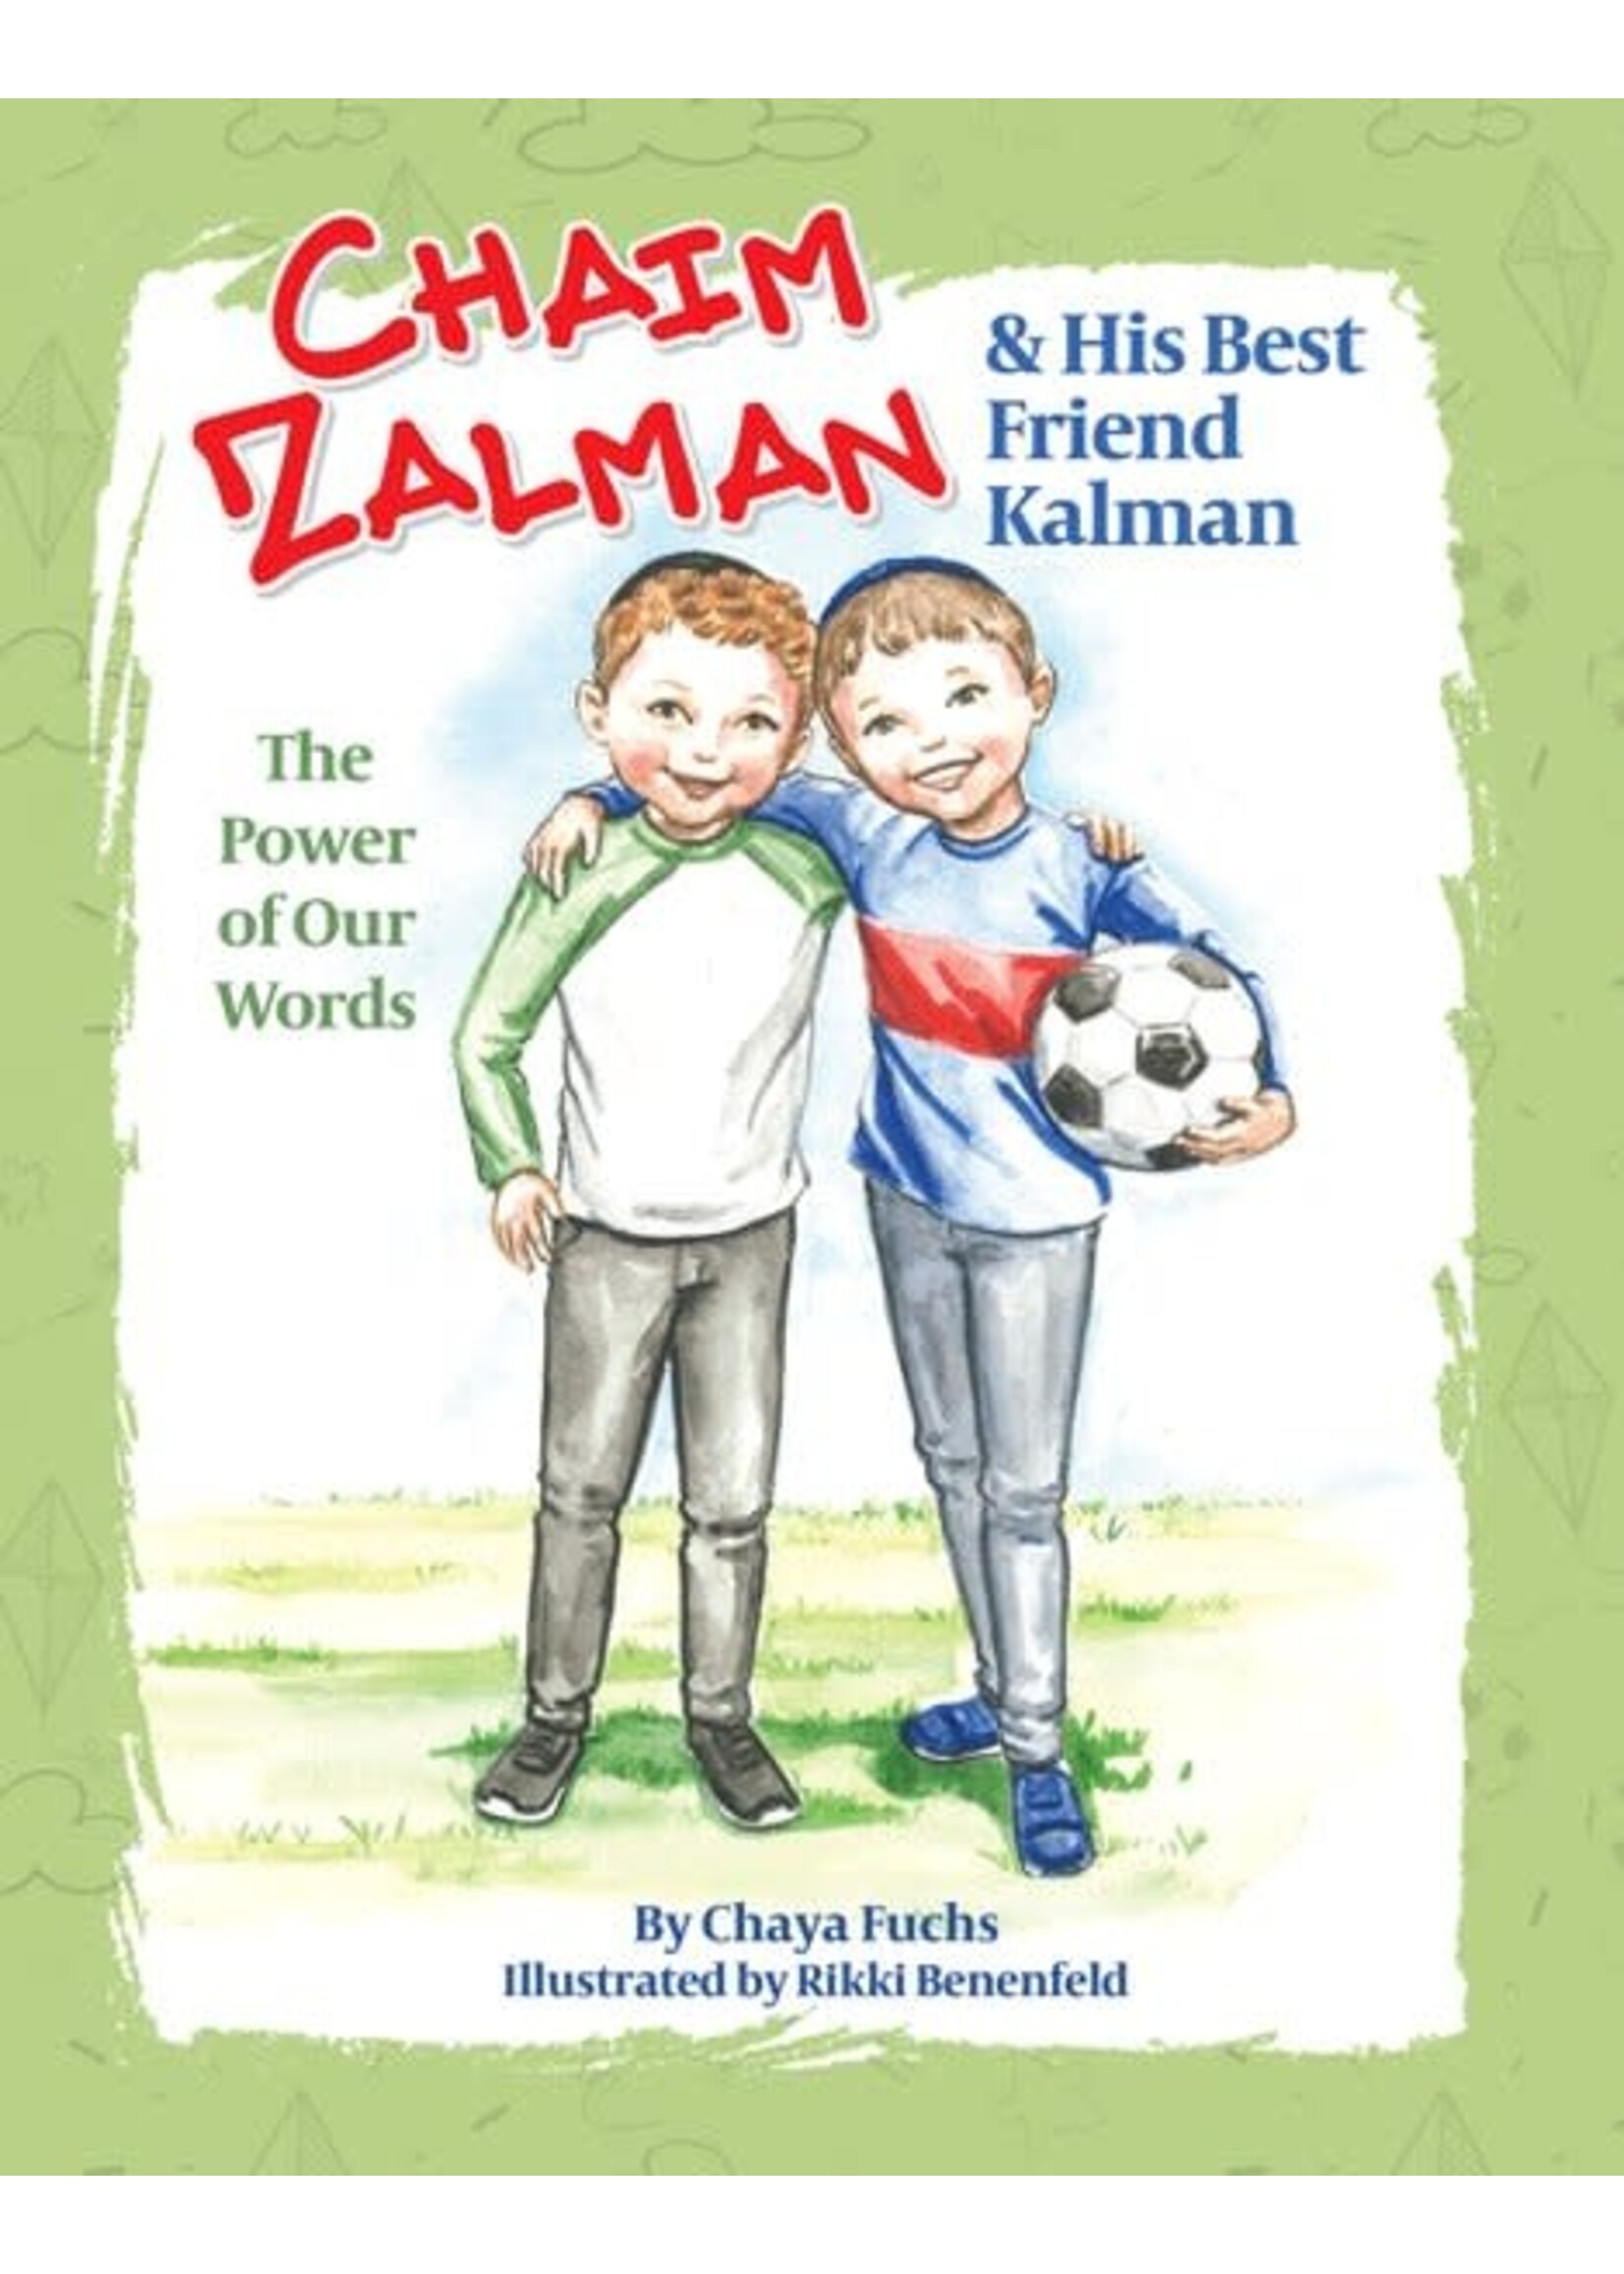 CHAIM ZALMEN & HIS BEST FRIEND KALMAN